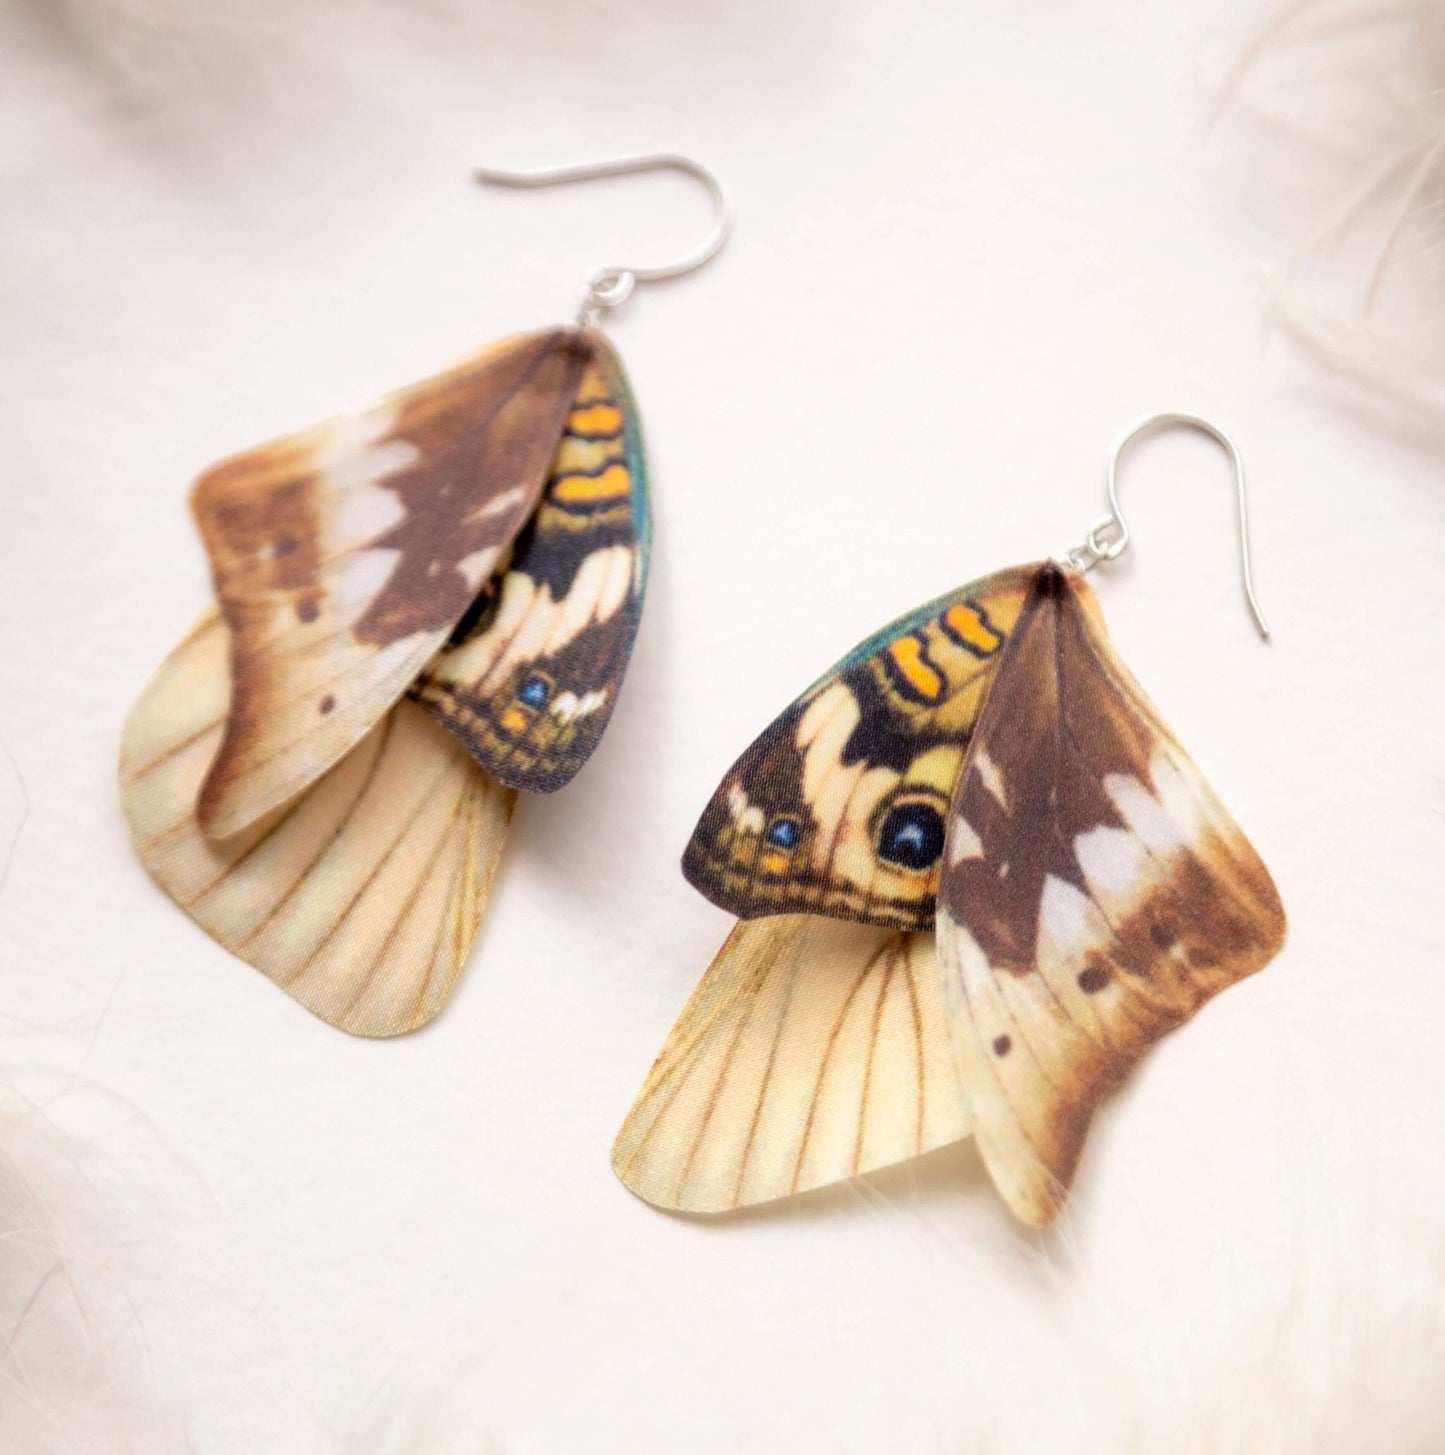 Funky moth earrings with delicate wings